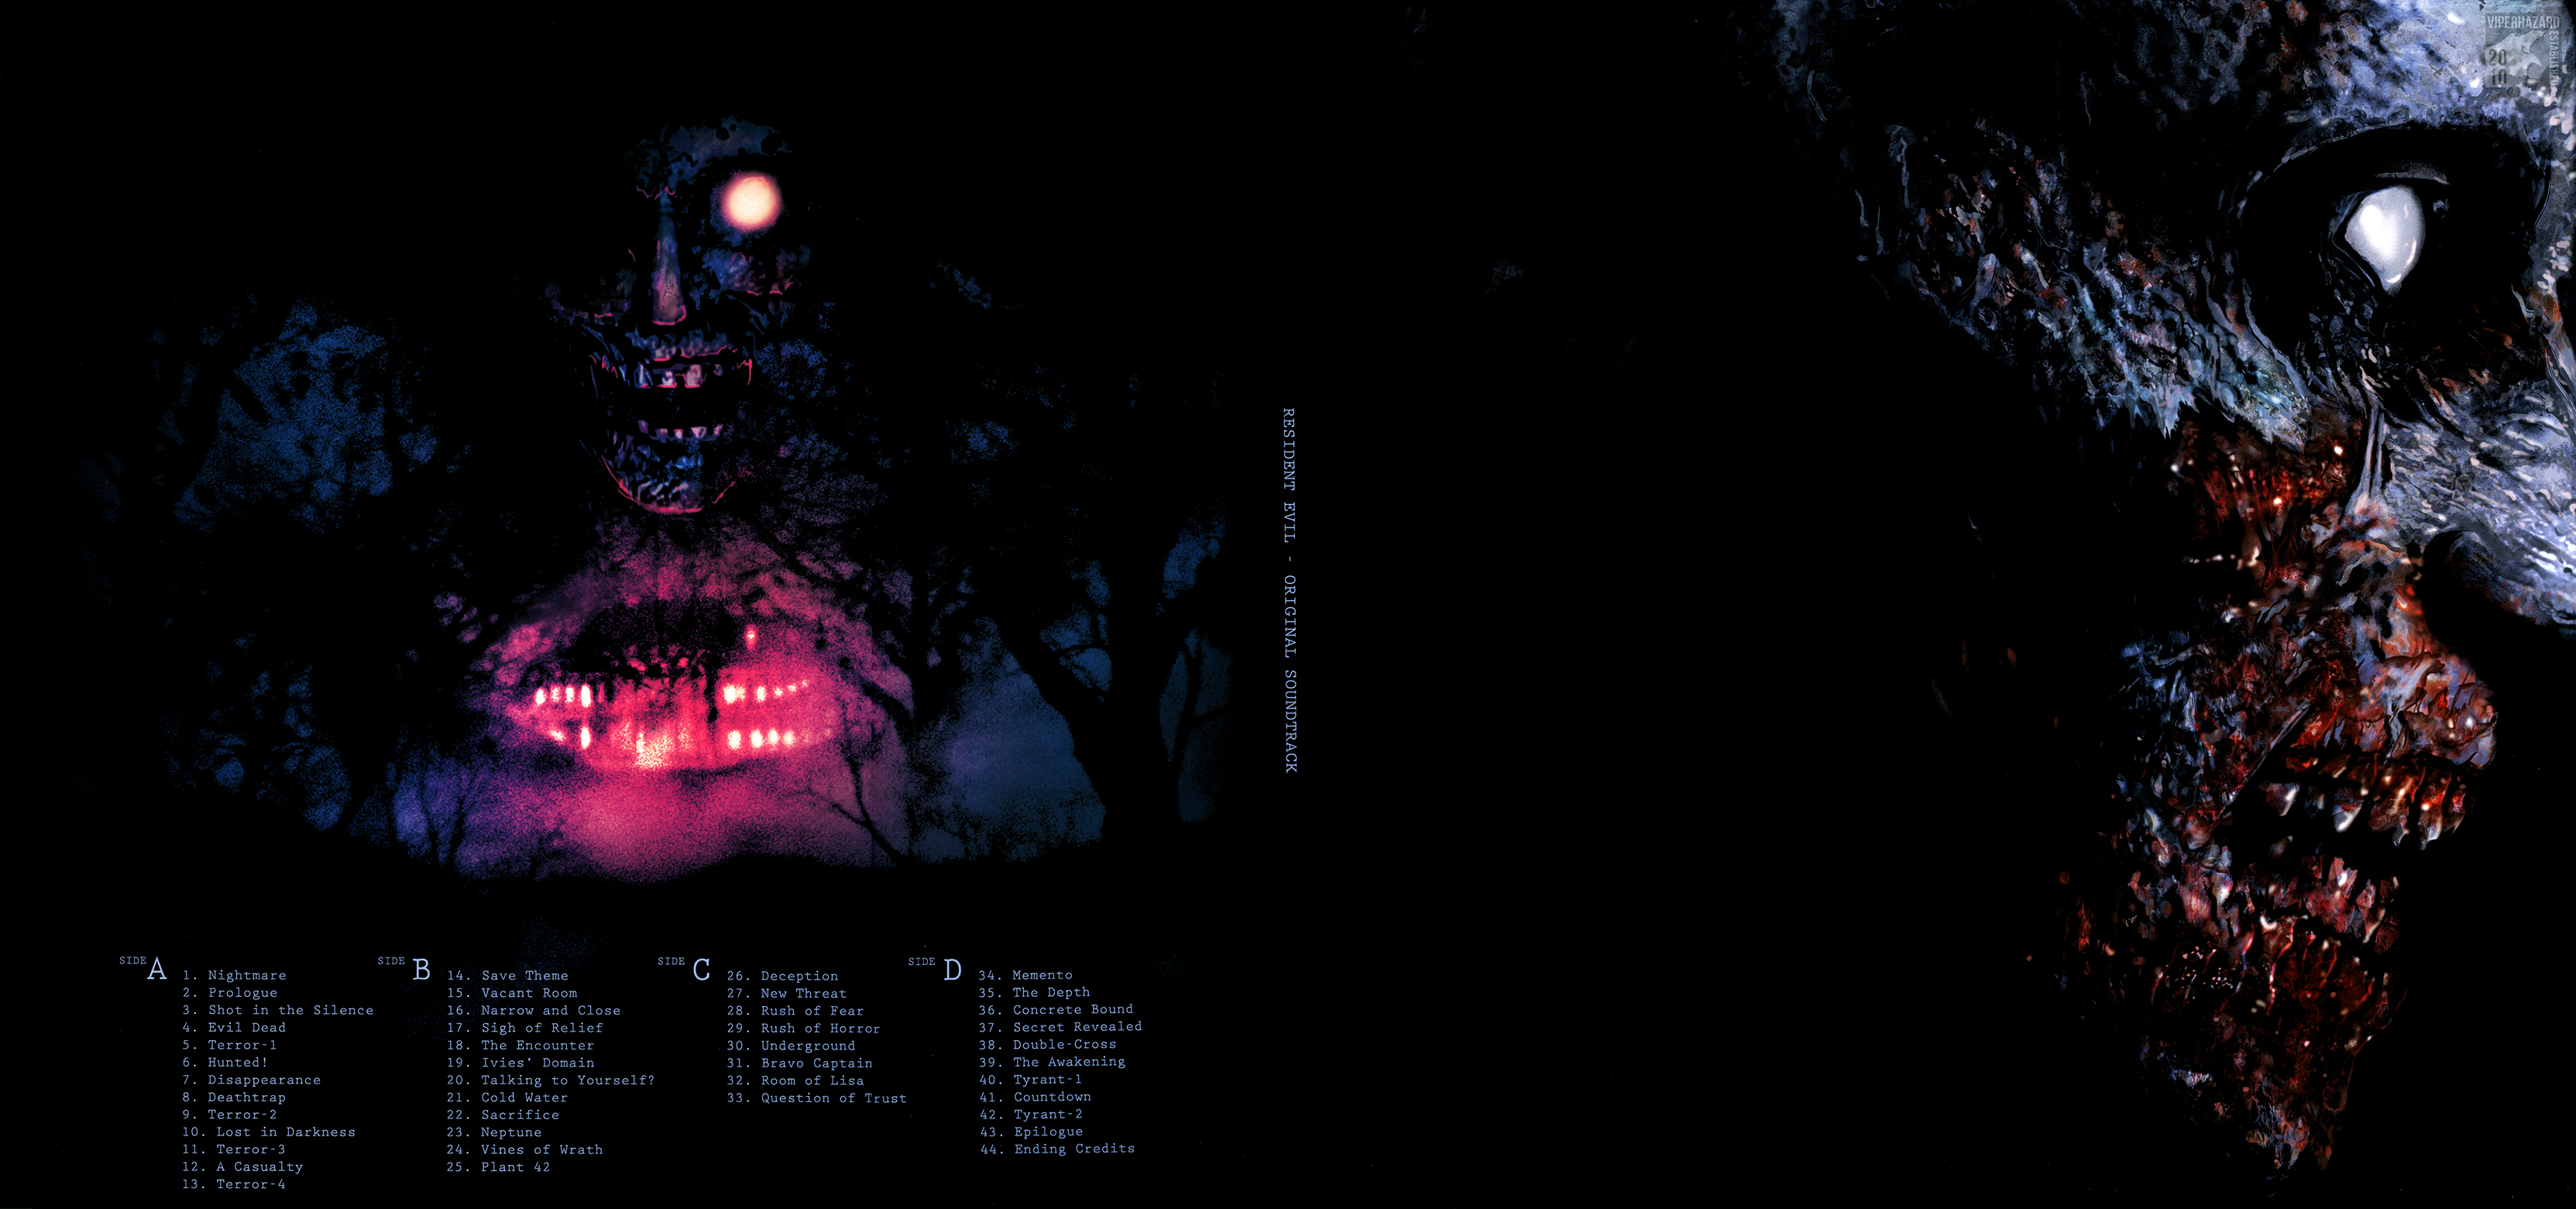 Resident Evil 3: Nemesis (Deluxe Double Vinyl) – Laced Records